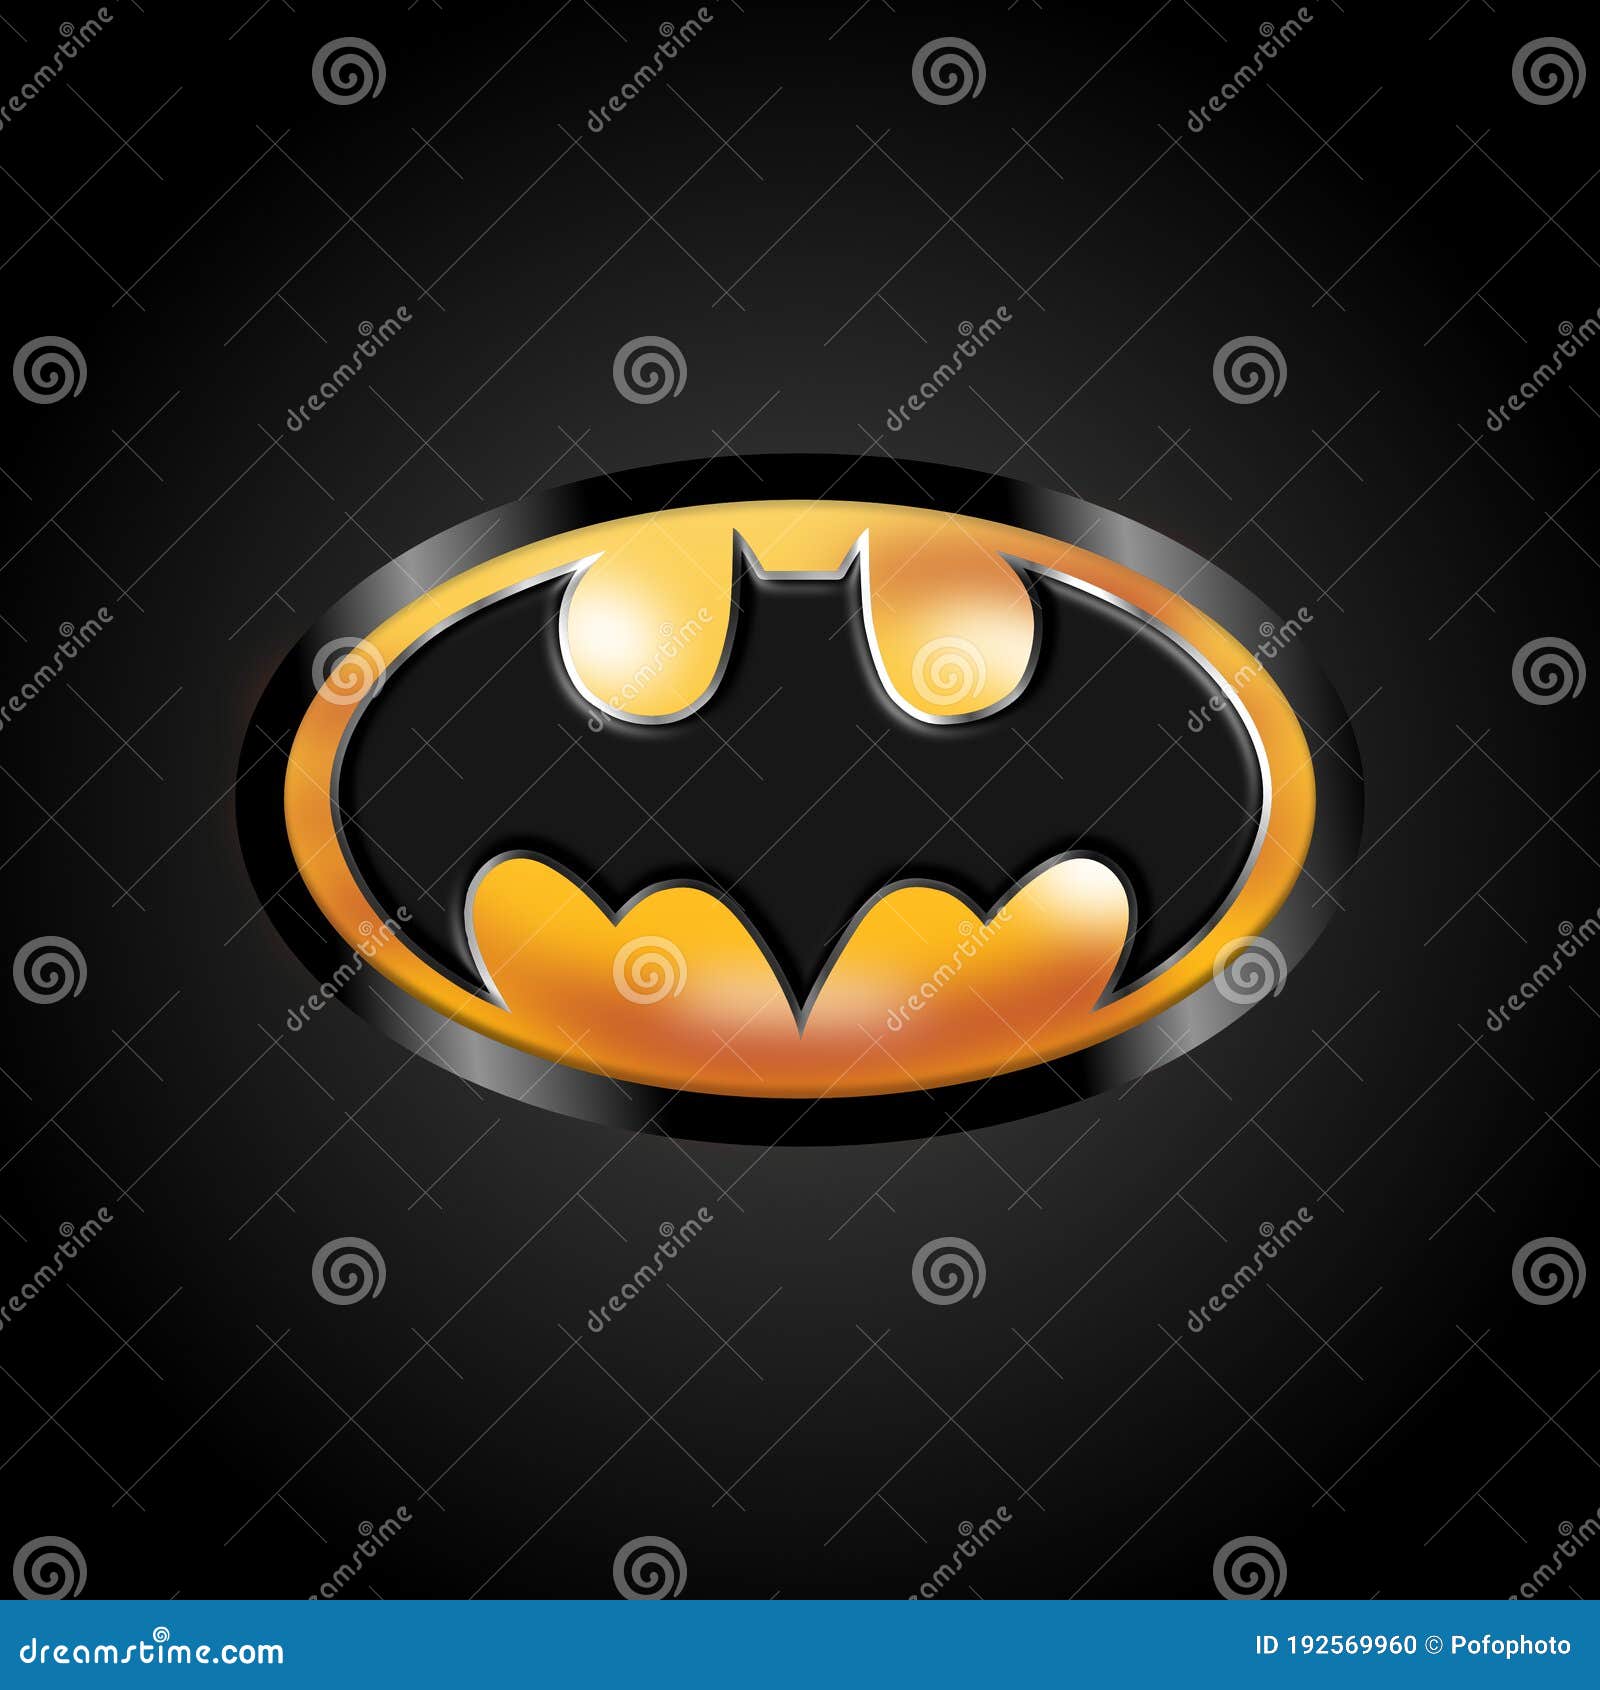 Batman logo vector 1989 editorial image. Illustration of background -  192569960